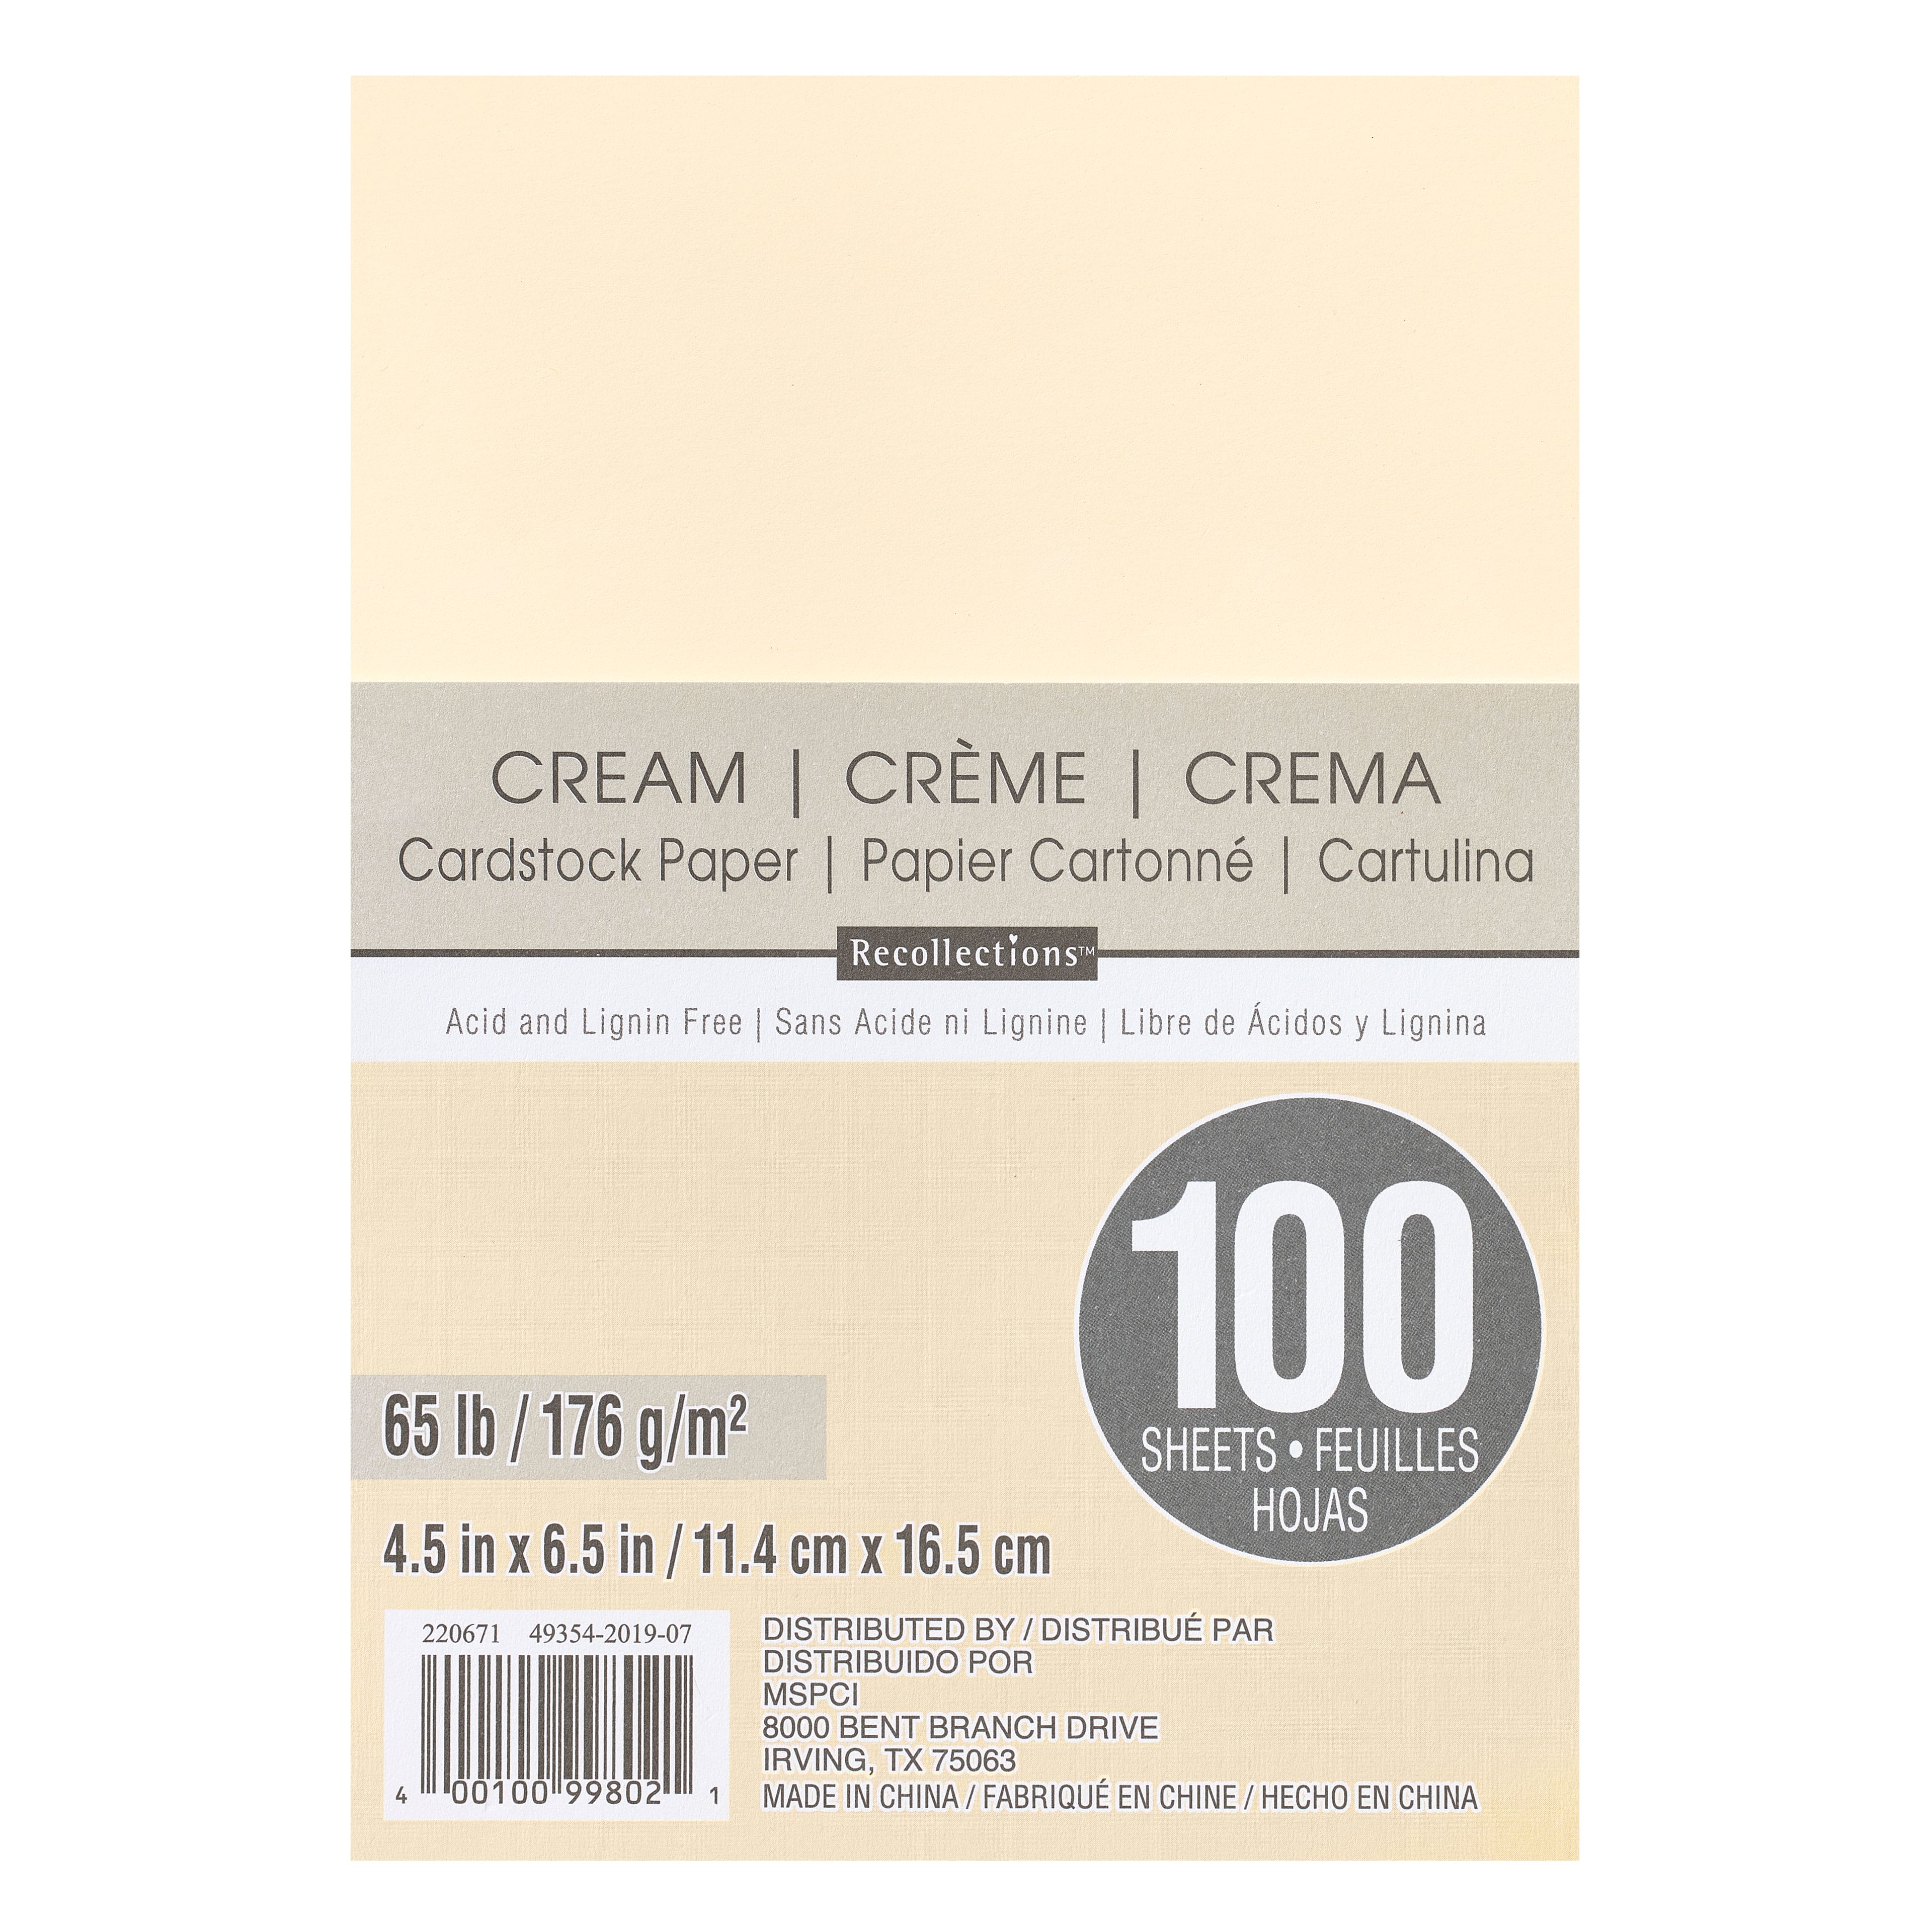 Rusty Cream Cardstock – Lasting Impressions for Paper